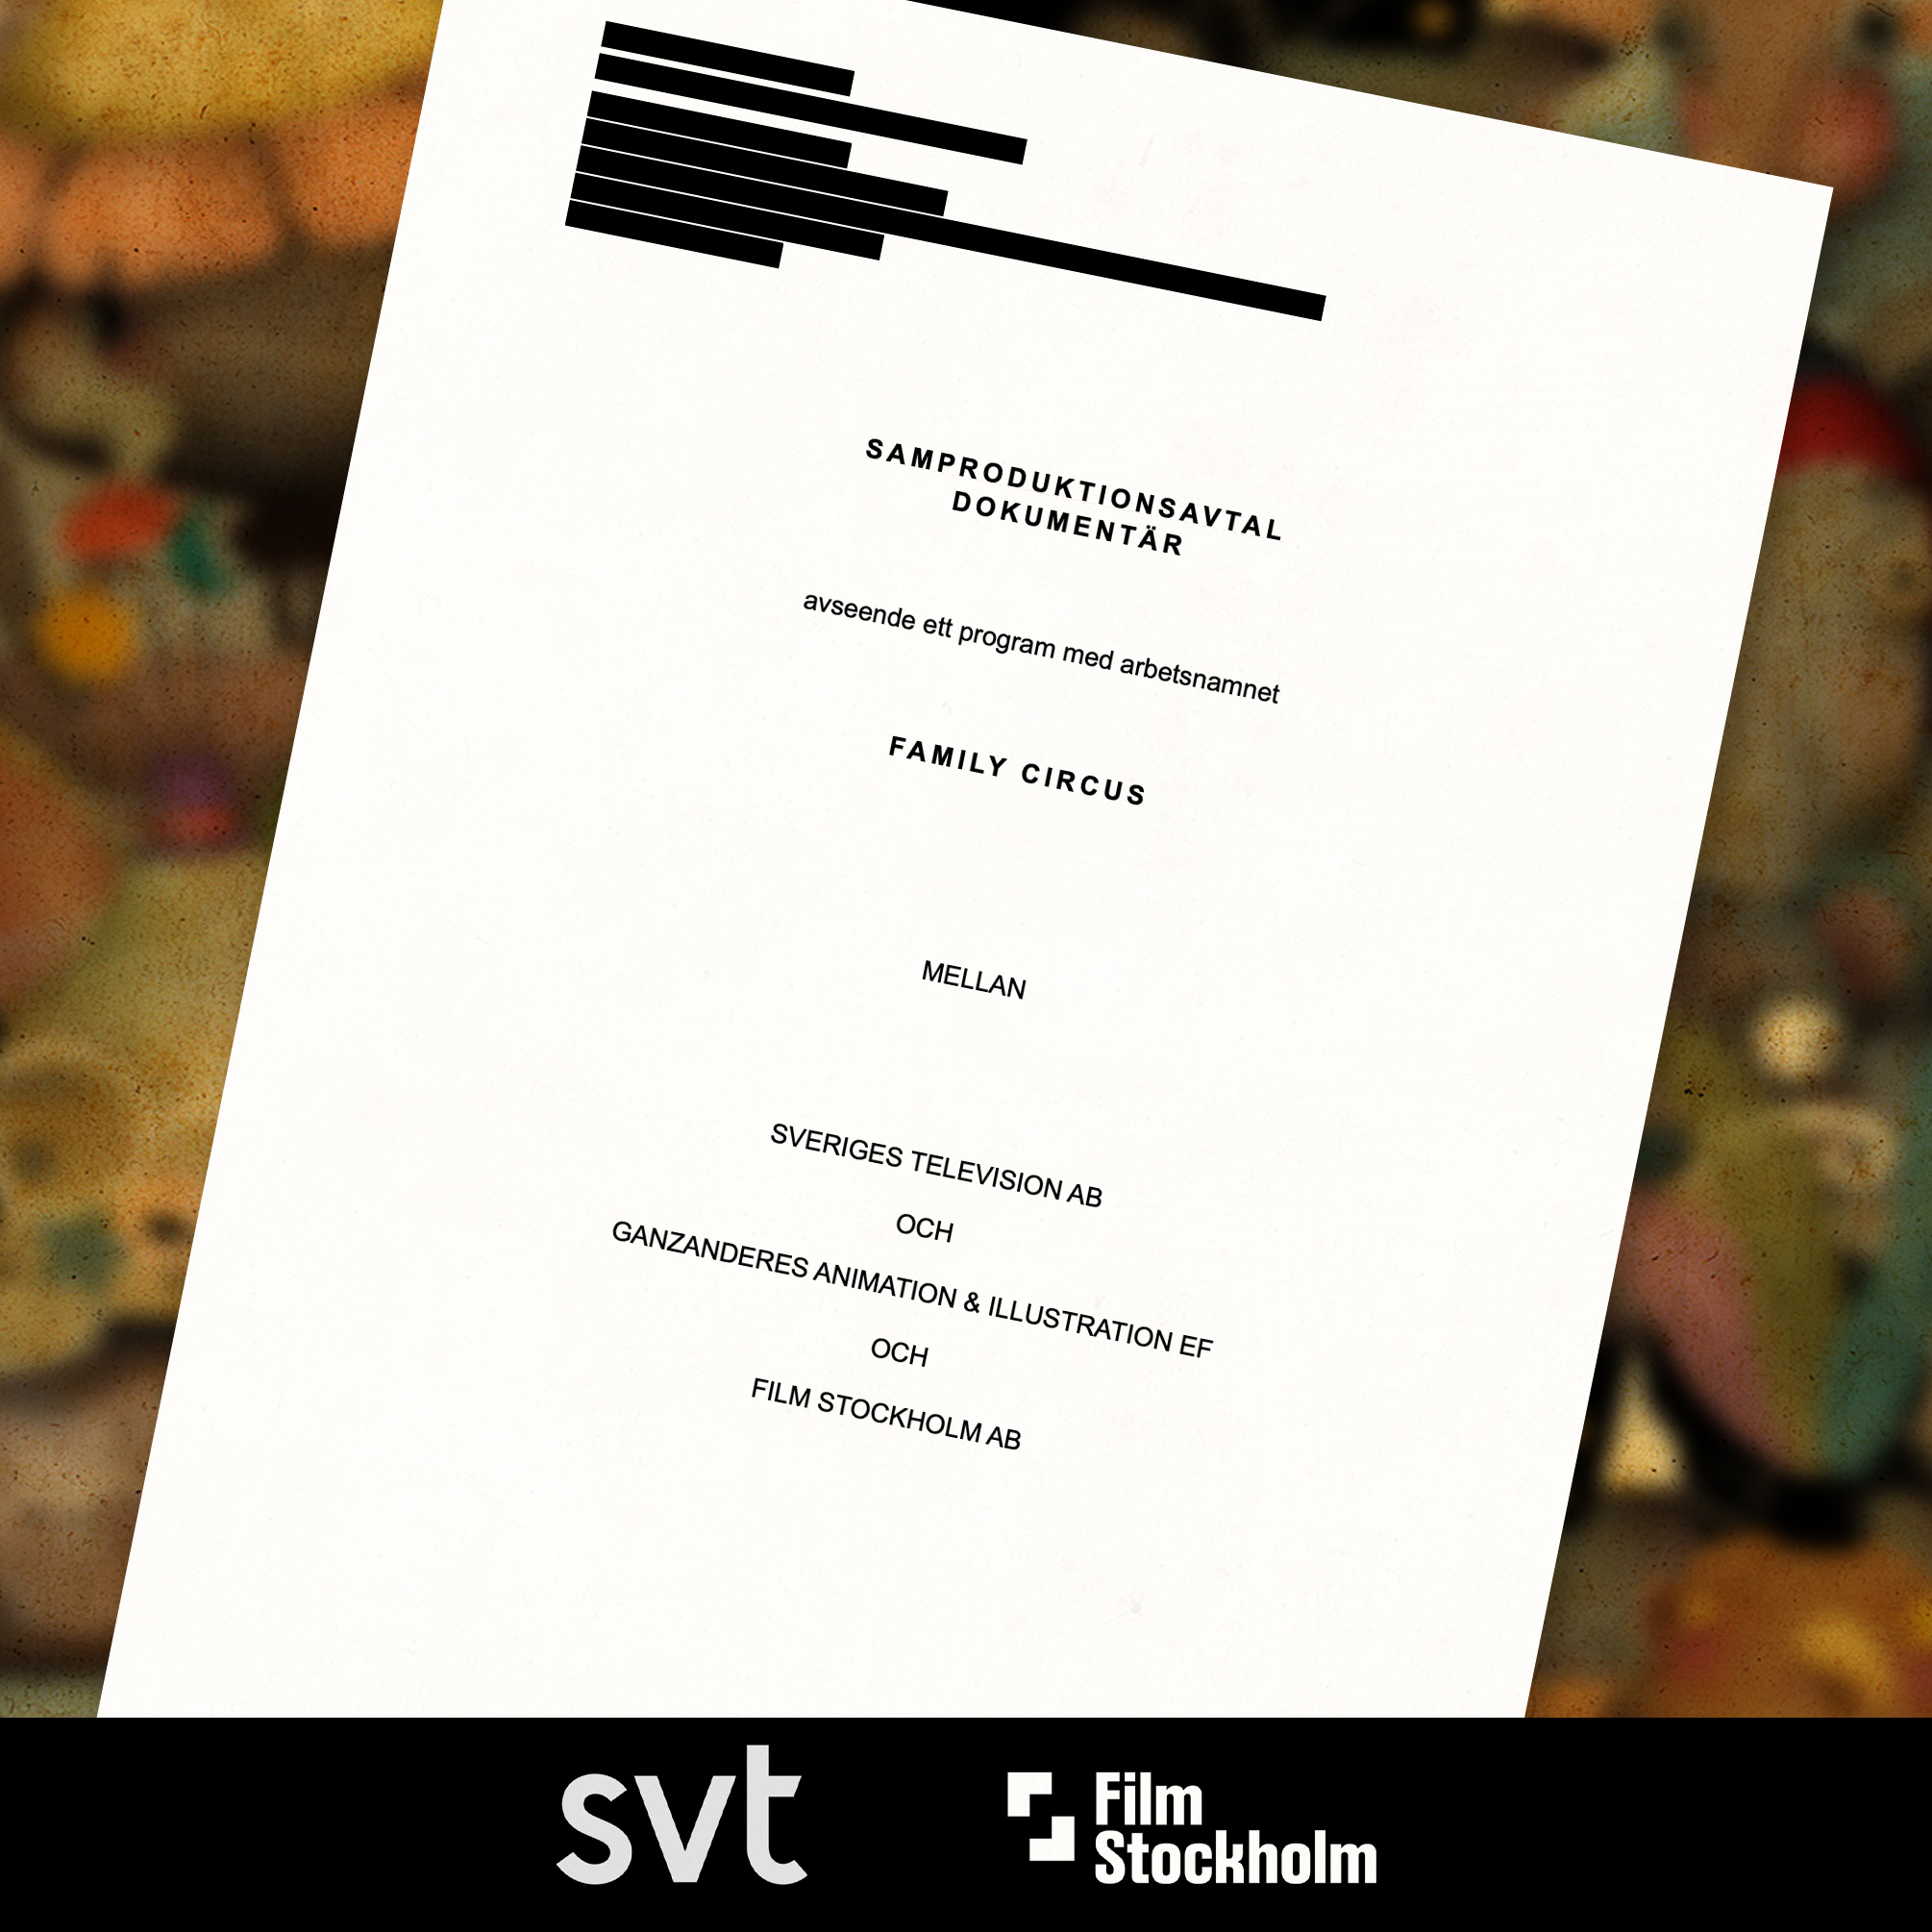 SVT and Film Stockholm